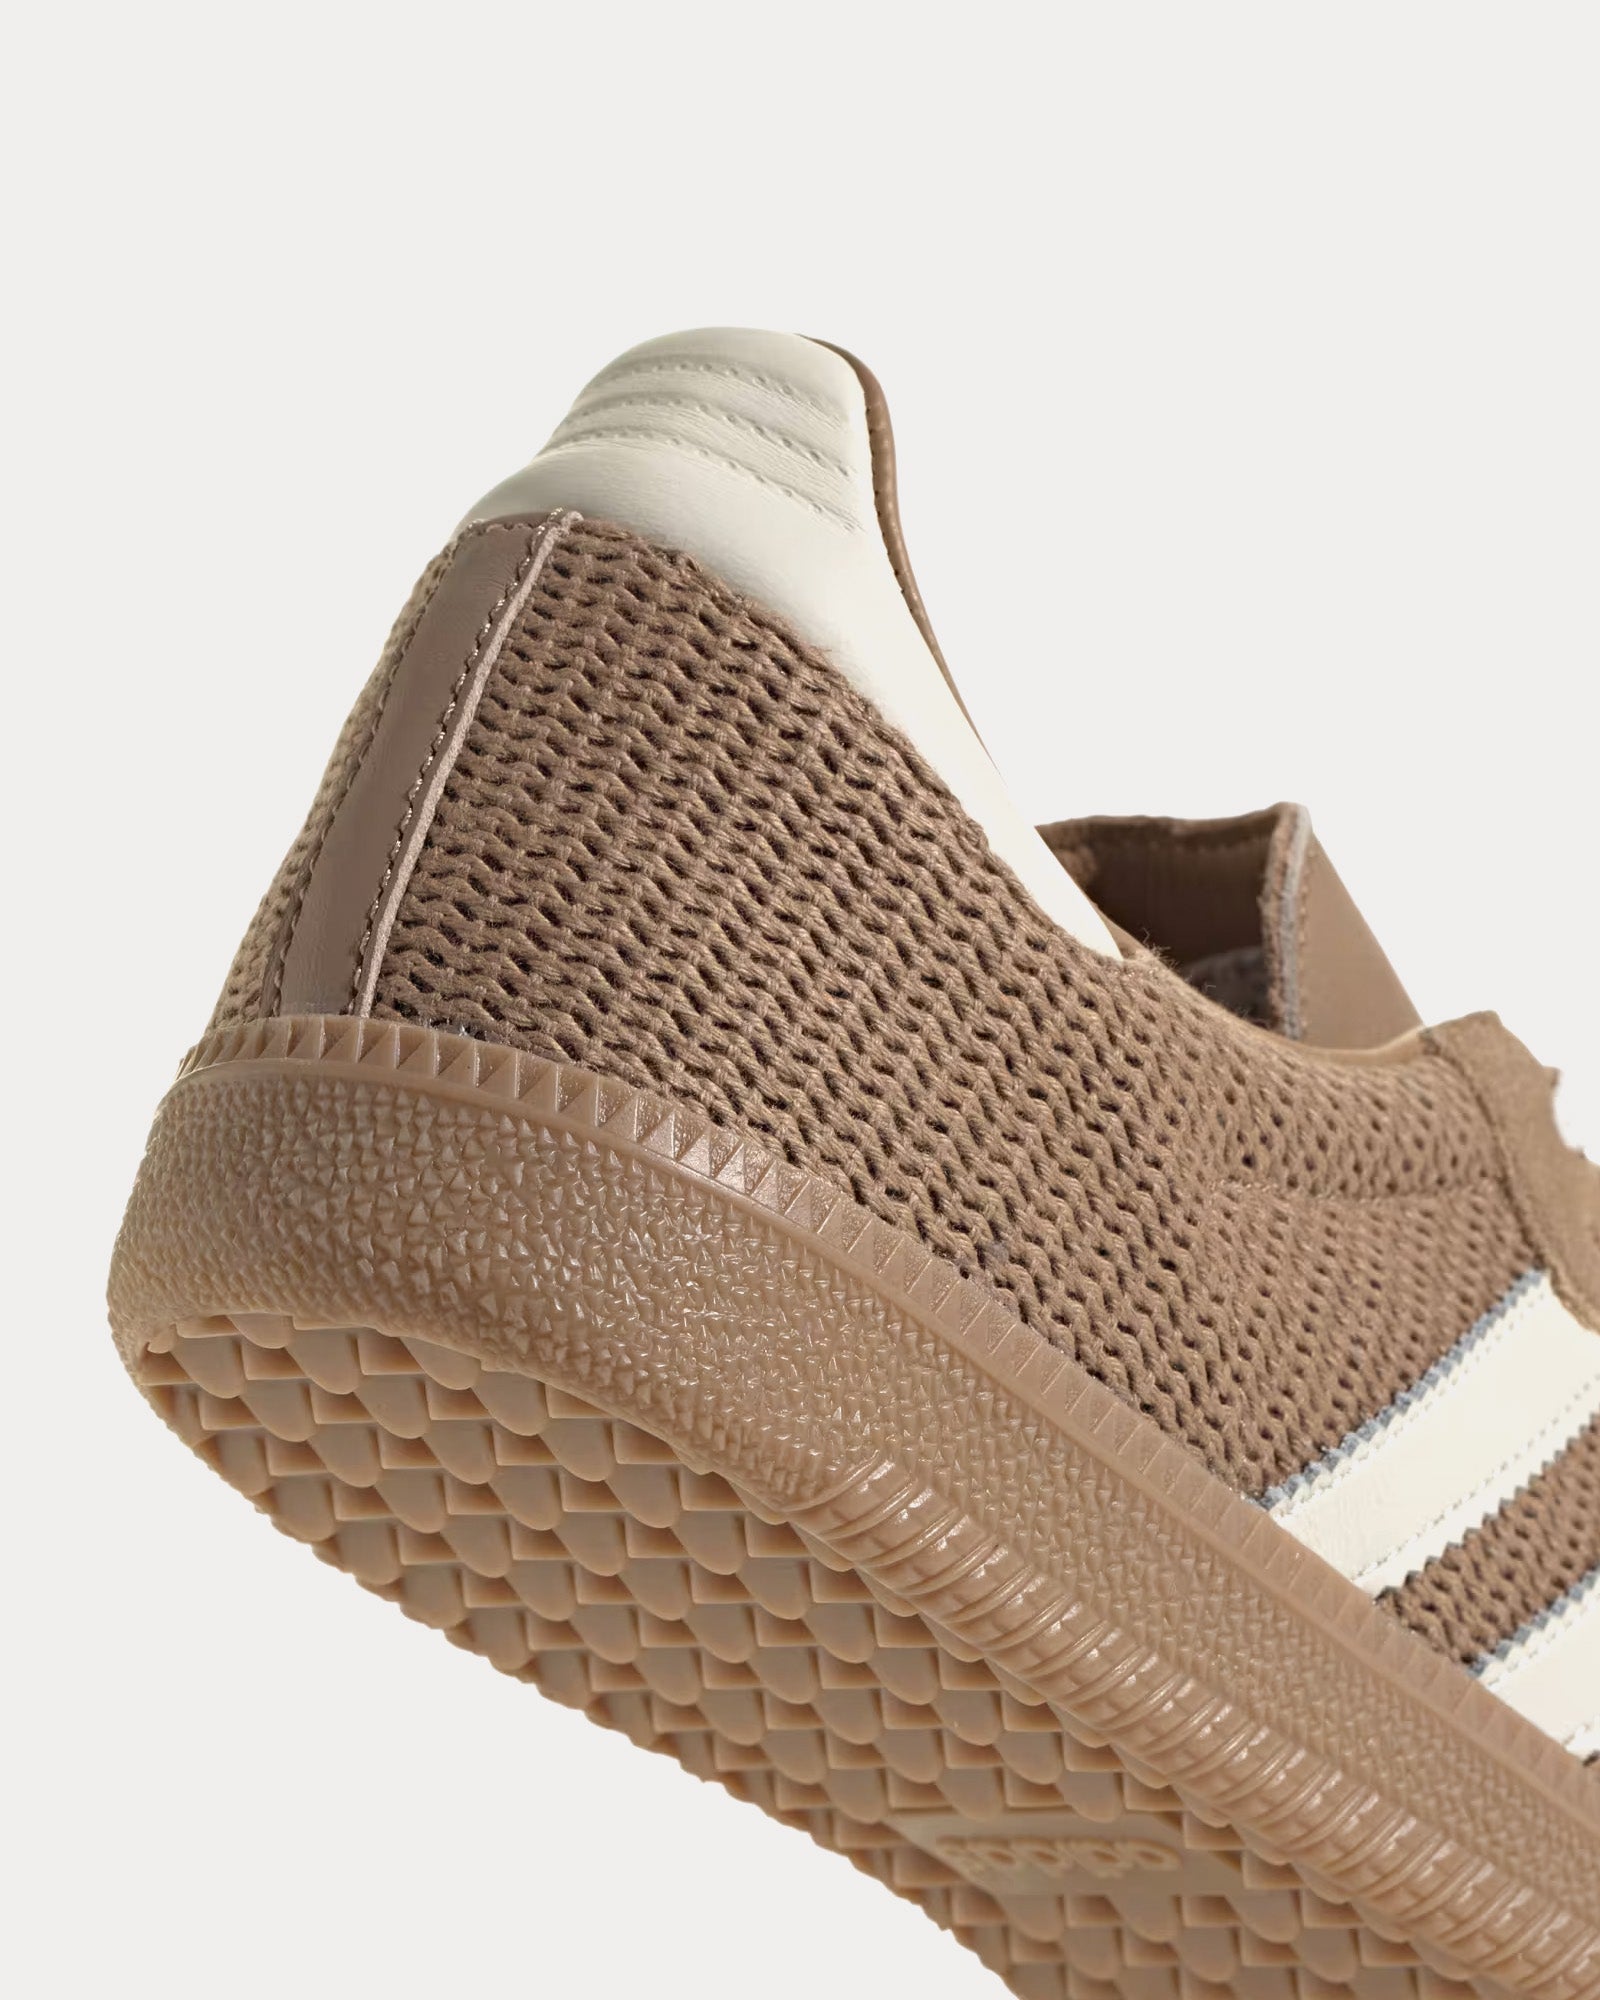 Adidas - Samba OG Cardboard / Chalk White / Brown Desert Low Top Sneakers